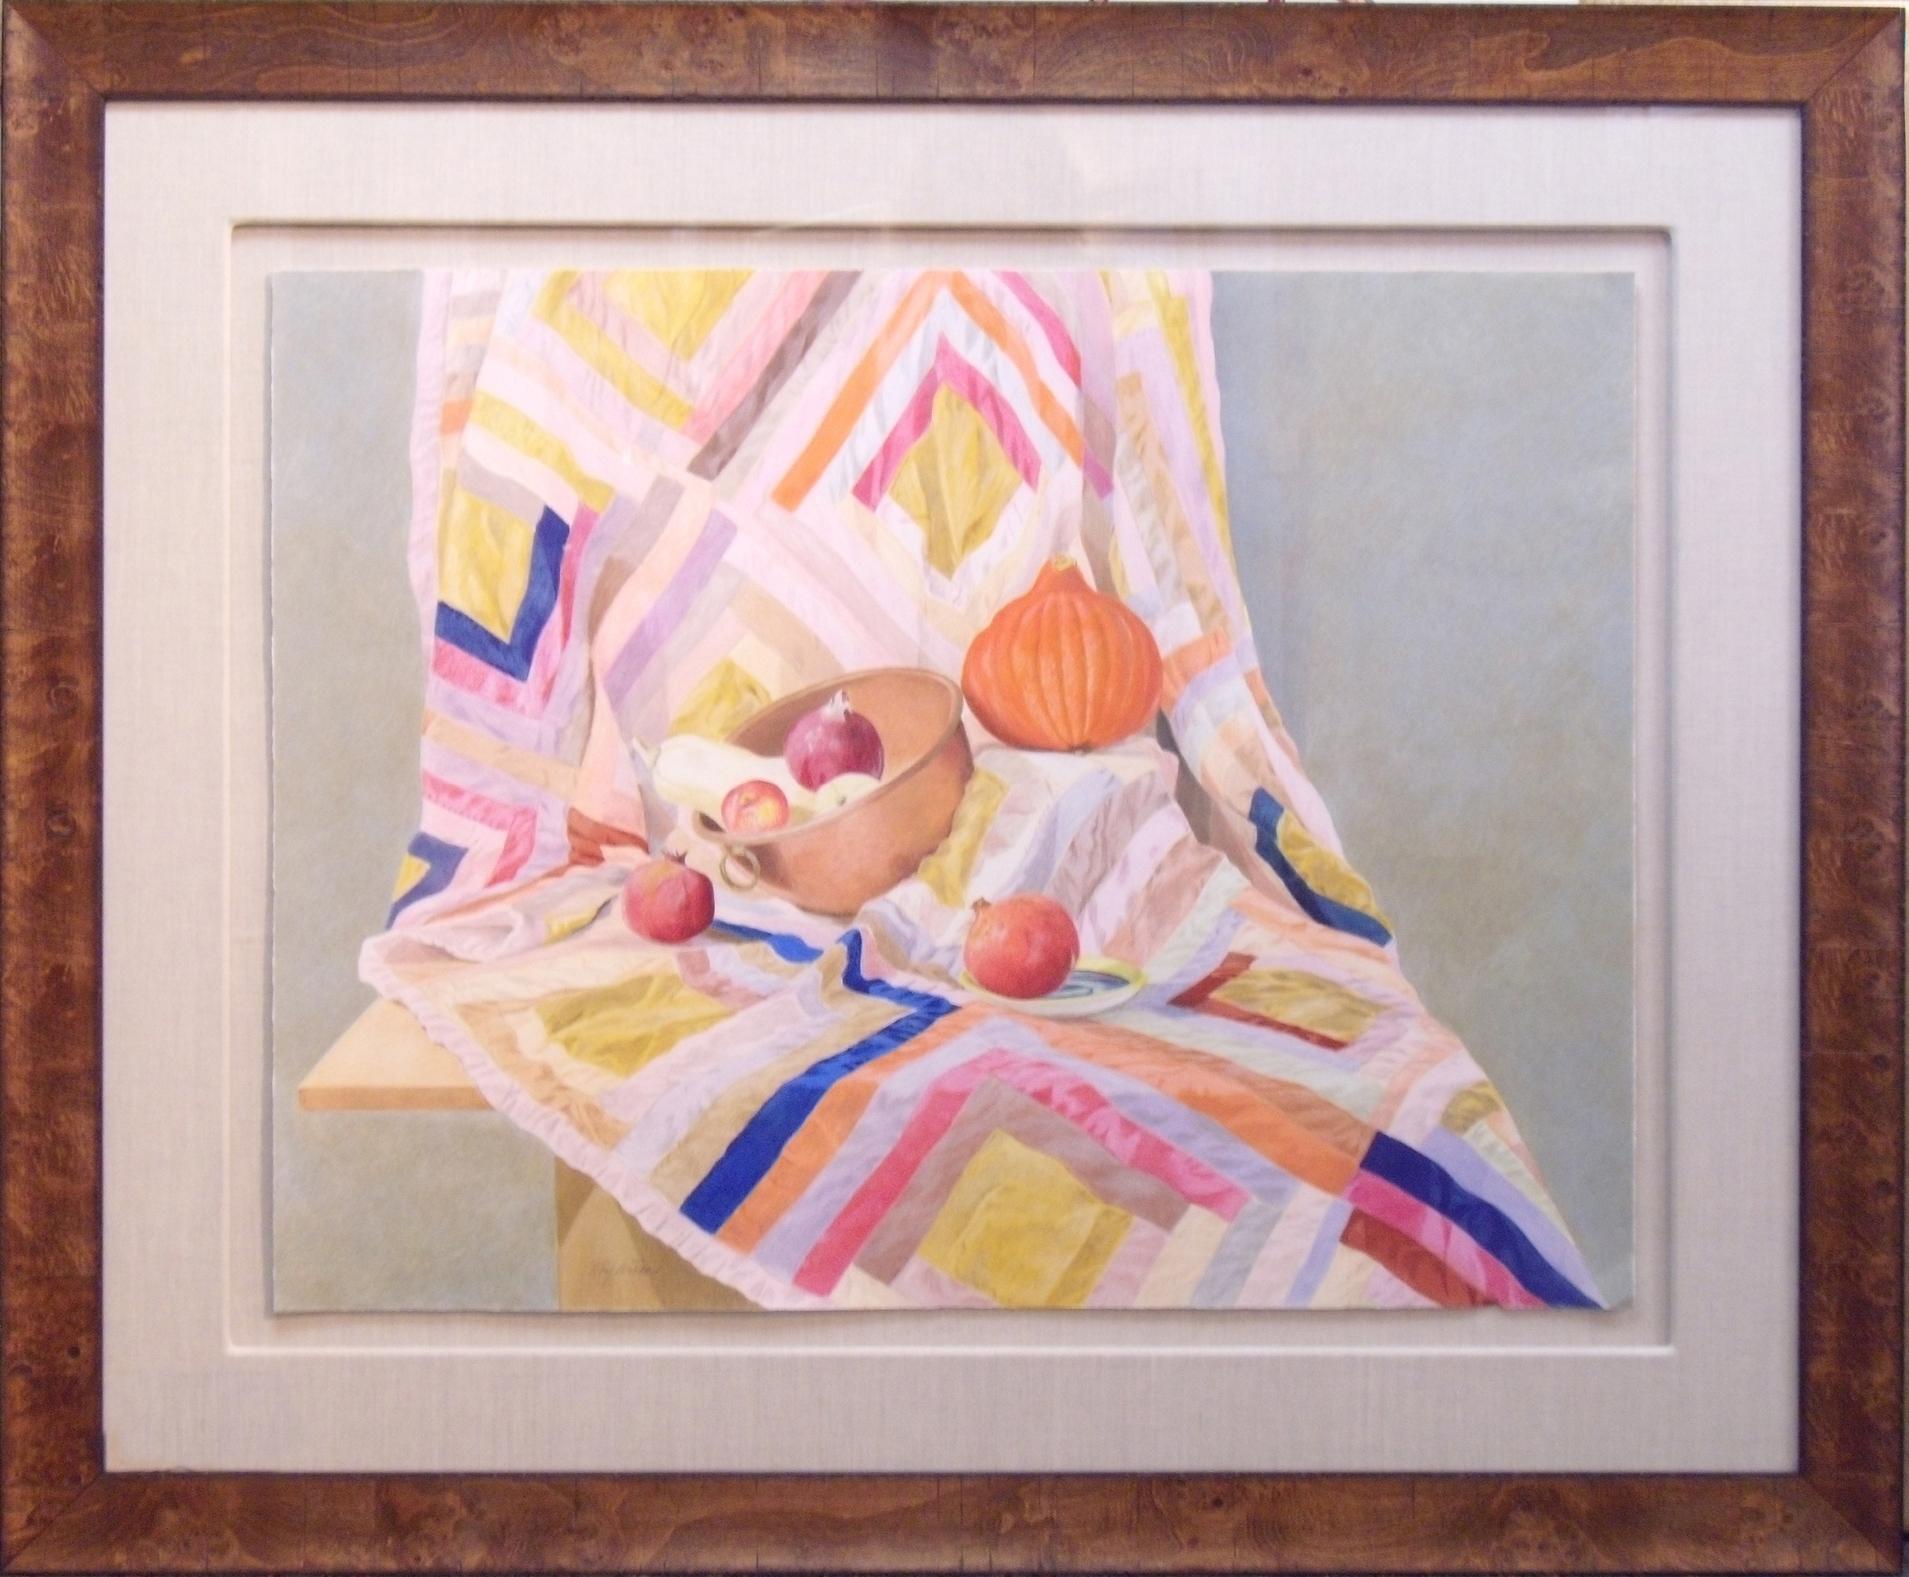 Ella's Quilt 42x50" framed oil pastel